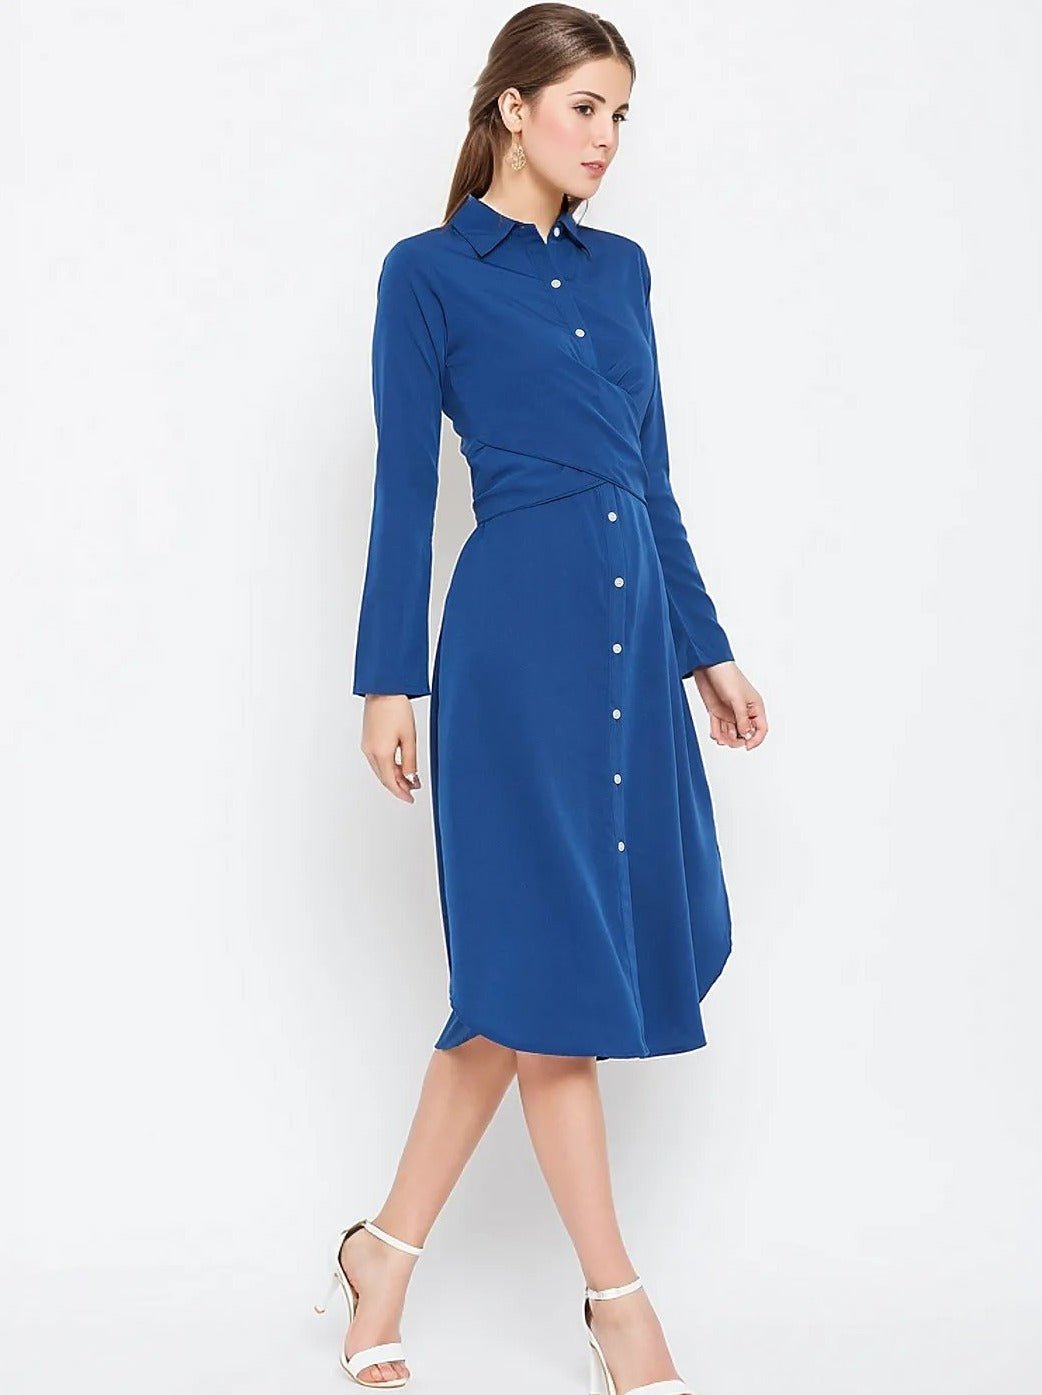 Folk Republic Women Solid Blue Collared Neck Button-Up Curved Midi Shirt Dress - #folk republic#